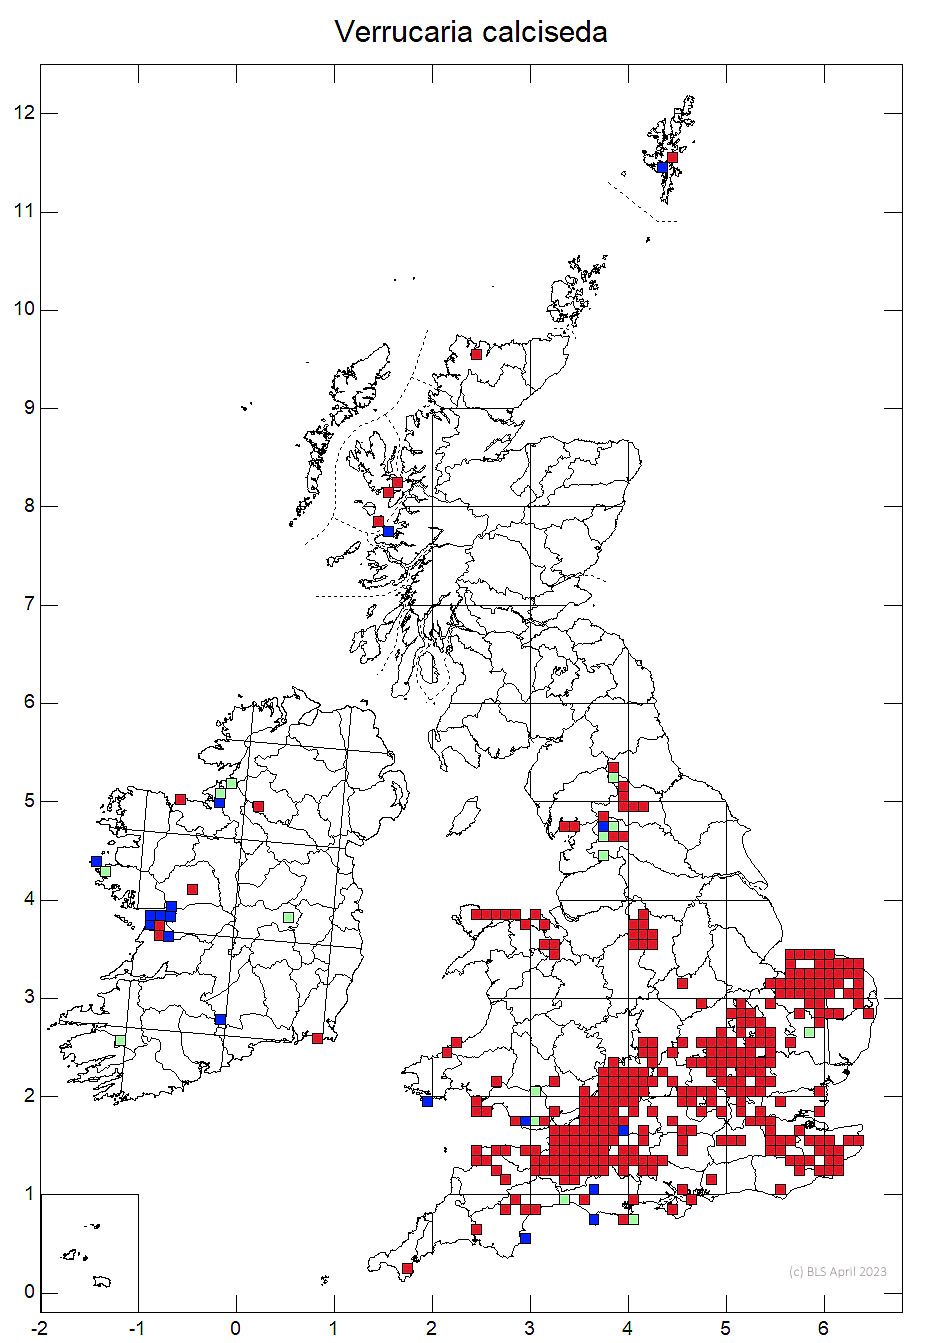 Verrucaria calciseda 10km sq distribution map